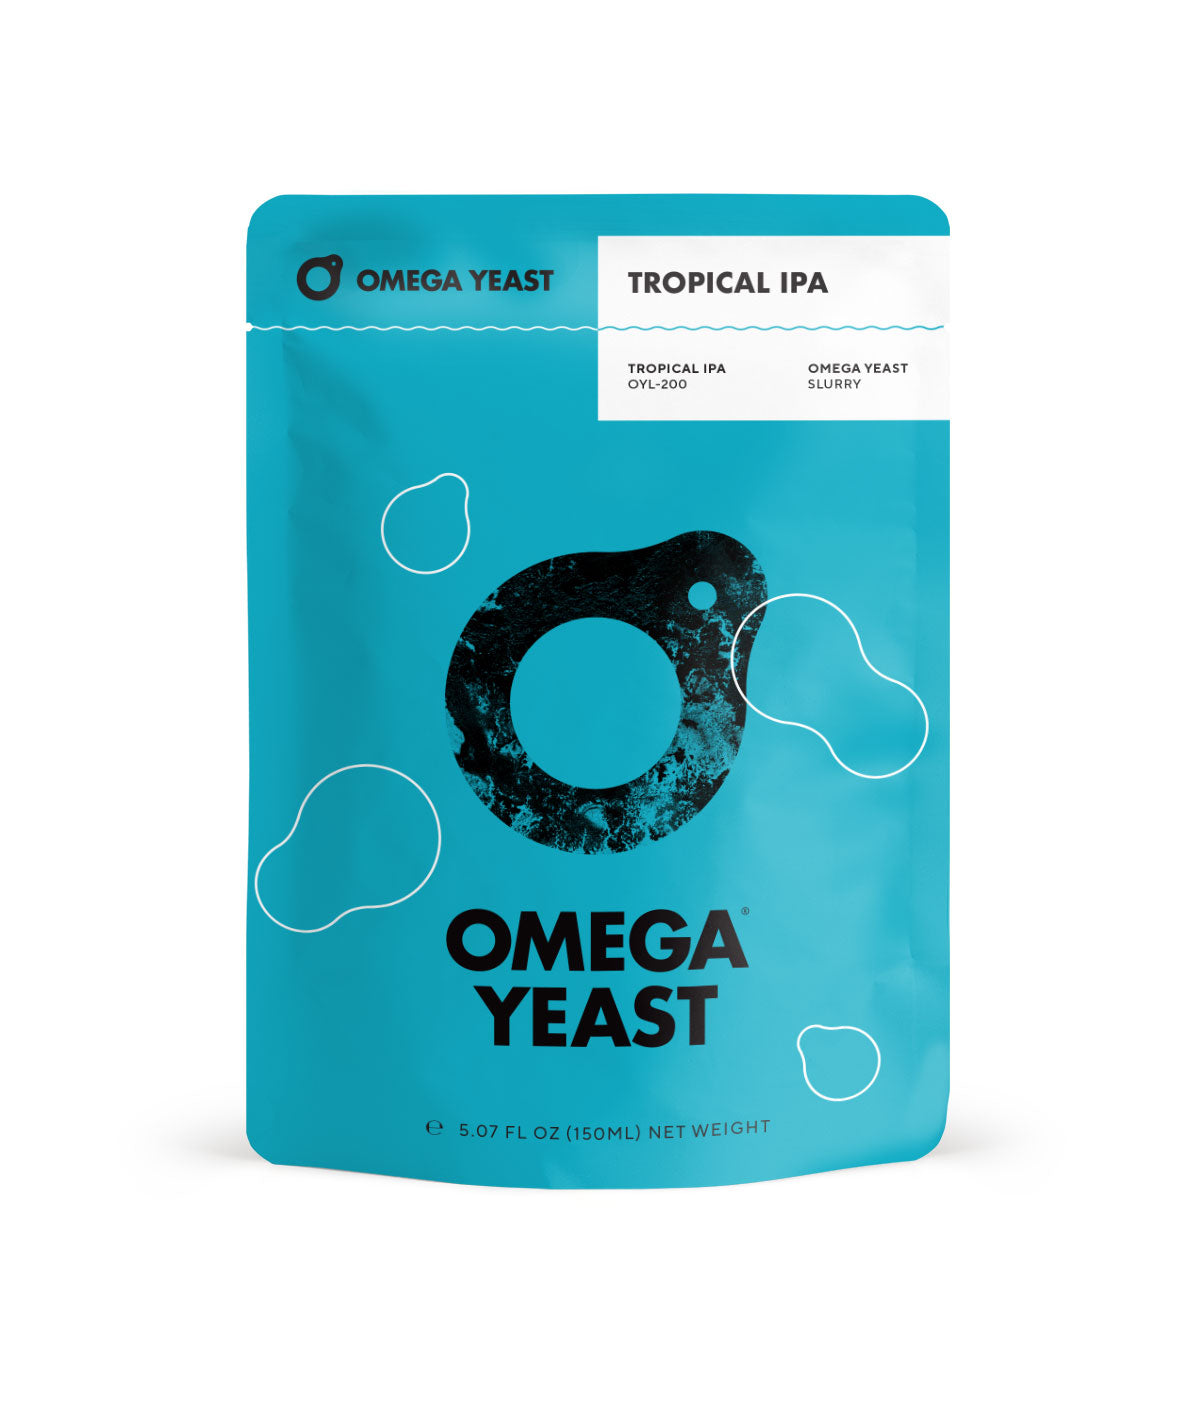 Tropical IPA Yeast by Omega Yeast